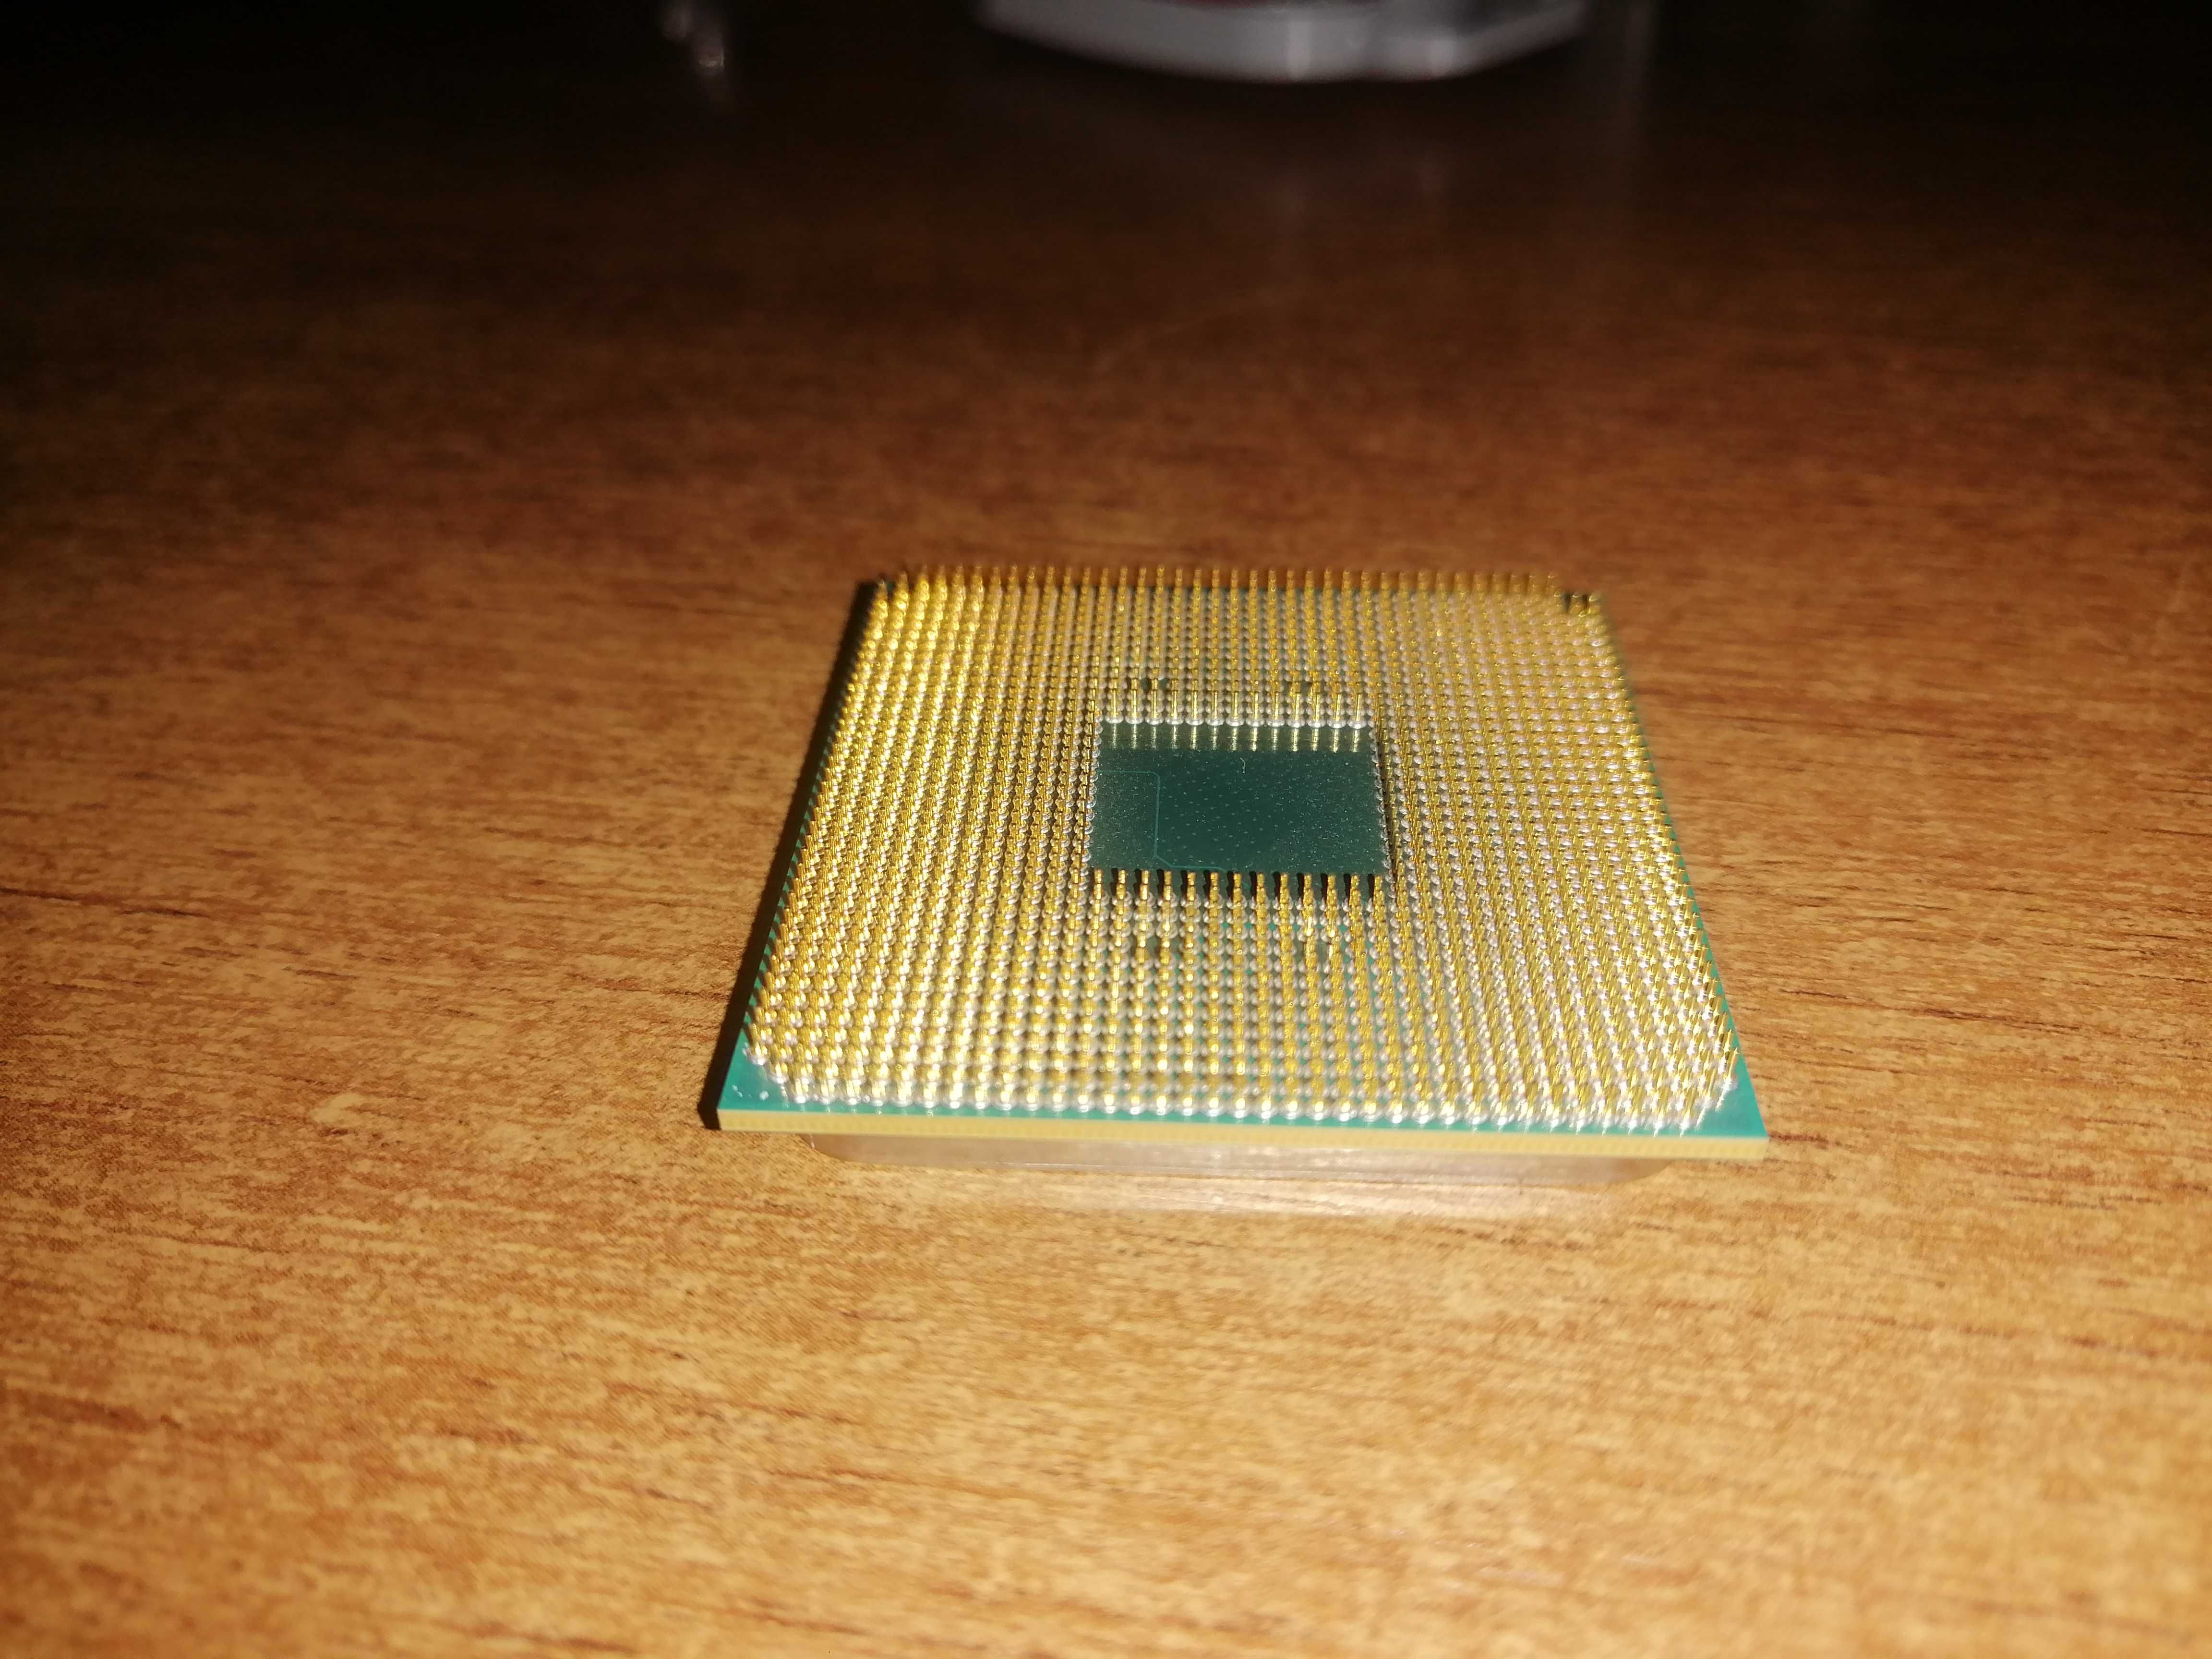 AMD A8-9600 Bristol Bridge AM4